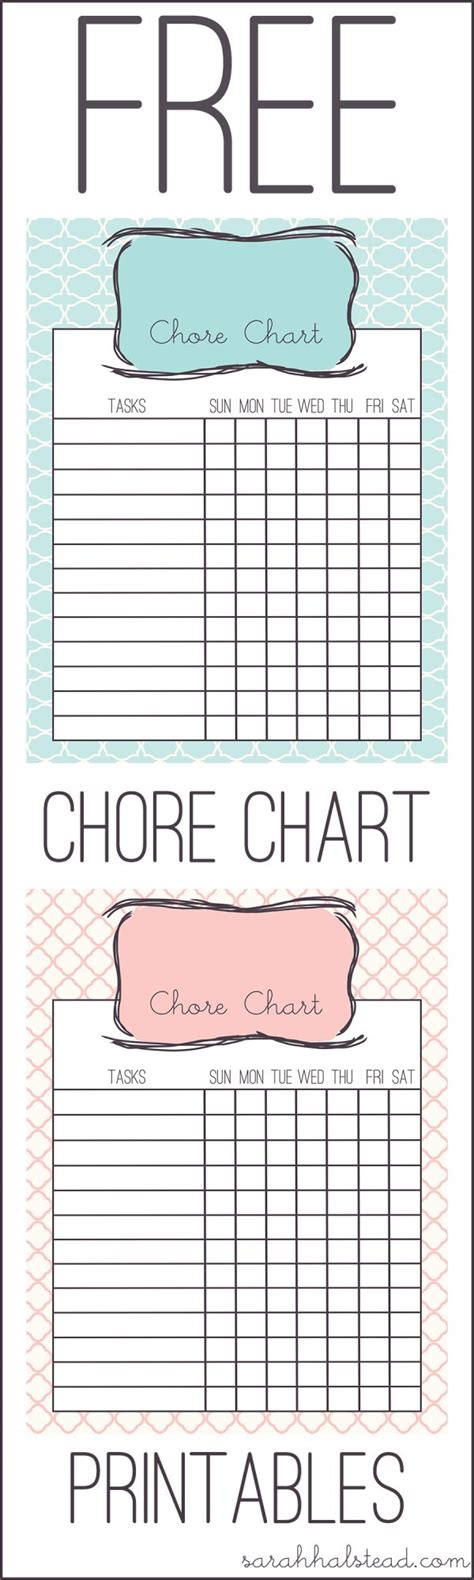 Gallery Of Free Printable Chore Charts Chore Charts Printables And